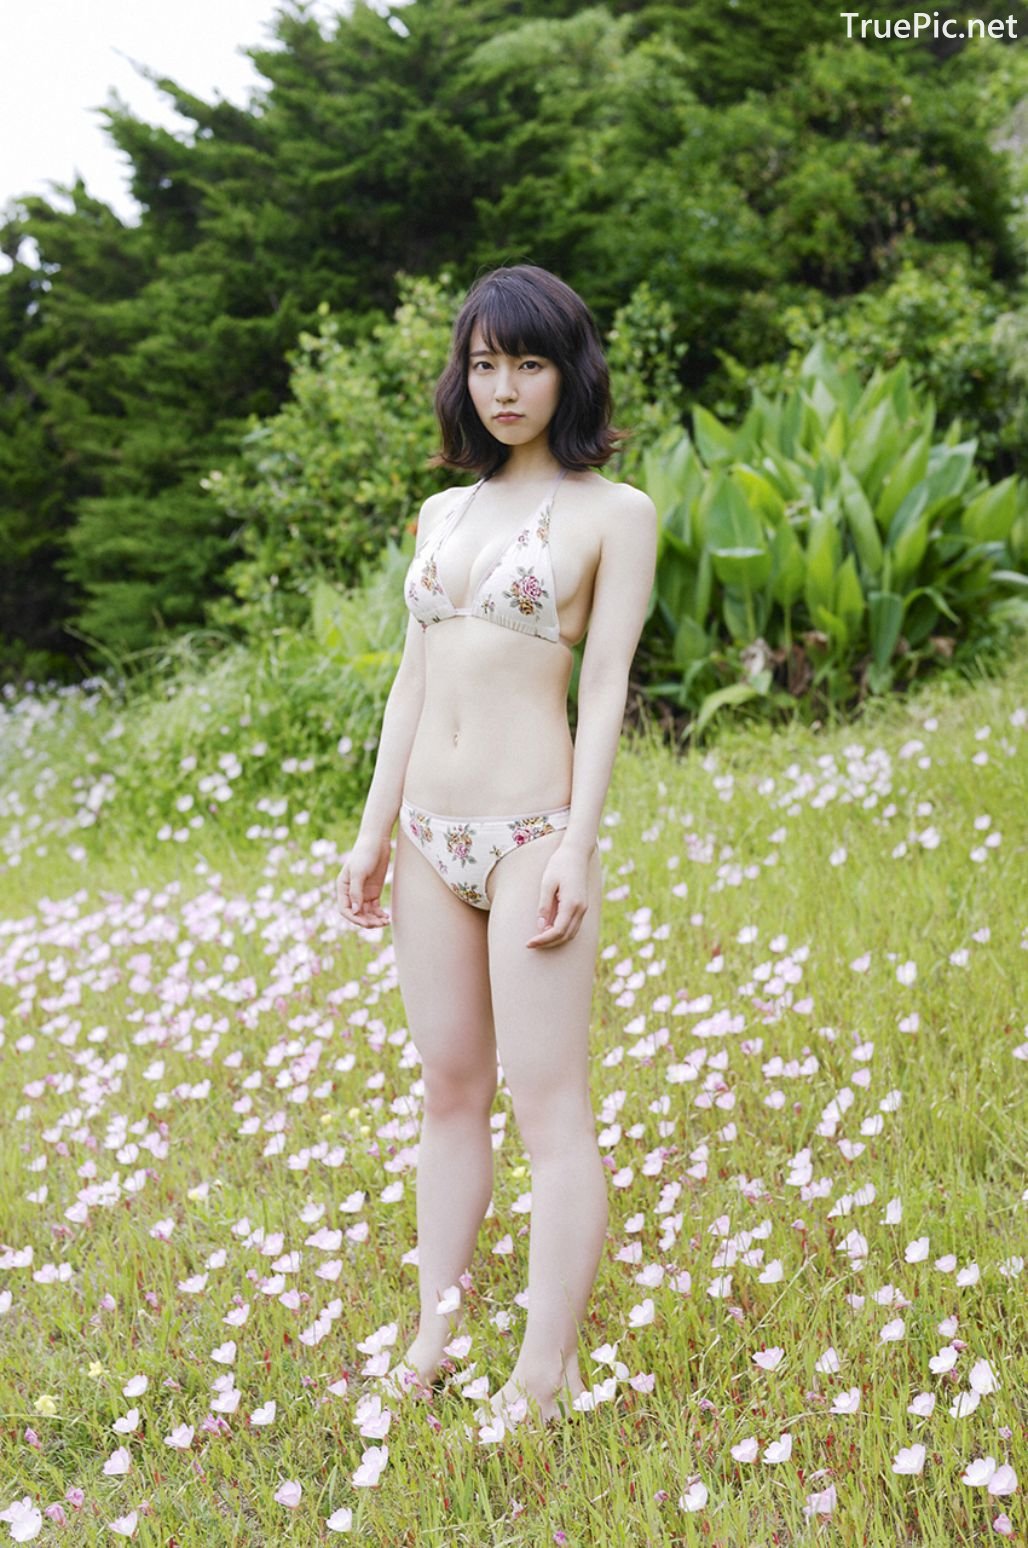 Image-Japanese-Actress-And-Model-Riho-Yoshioka-Pure-Beauty-Of-Sea-Goddess-TruePic.net- Picture-134